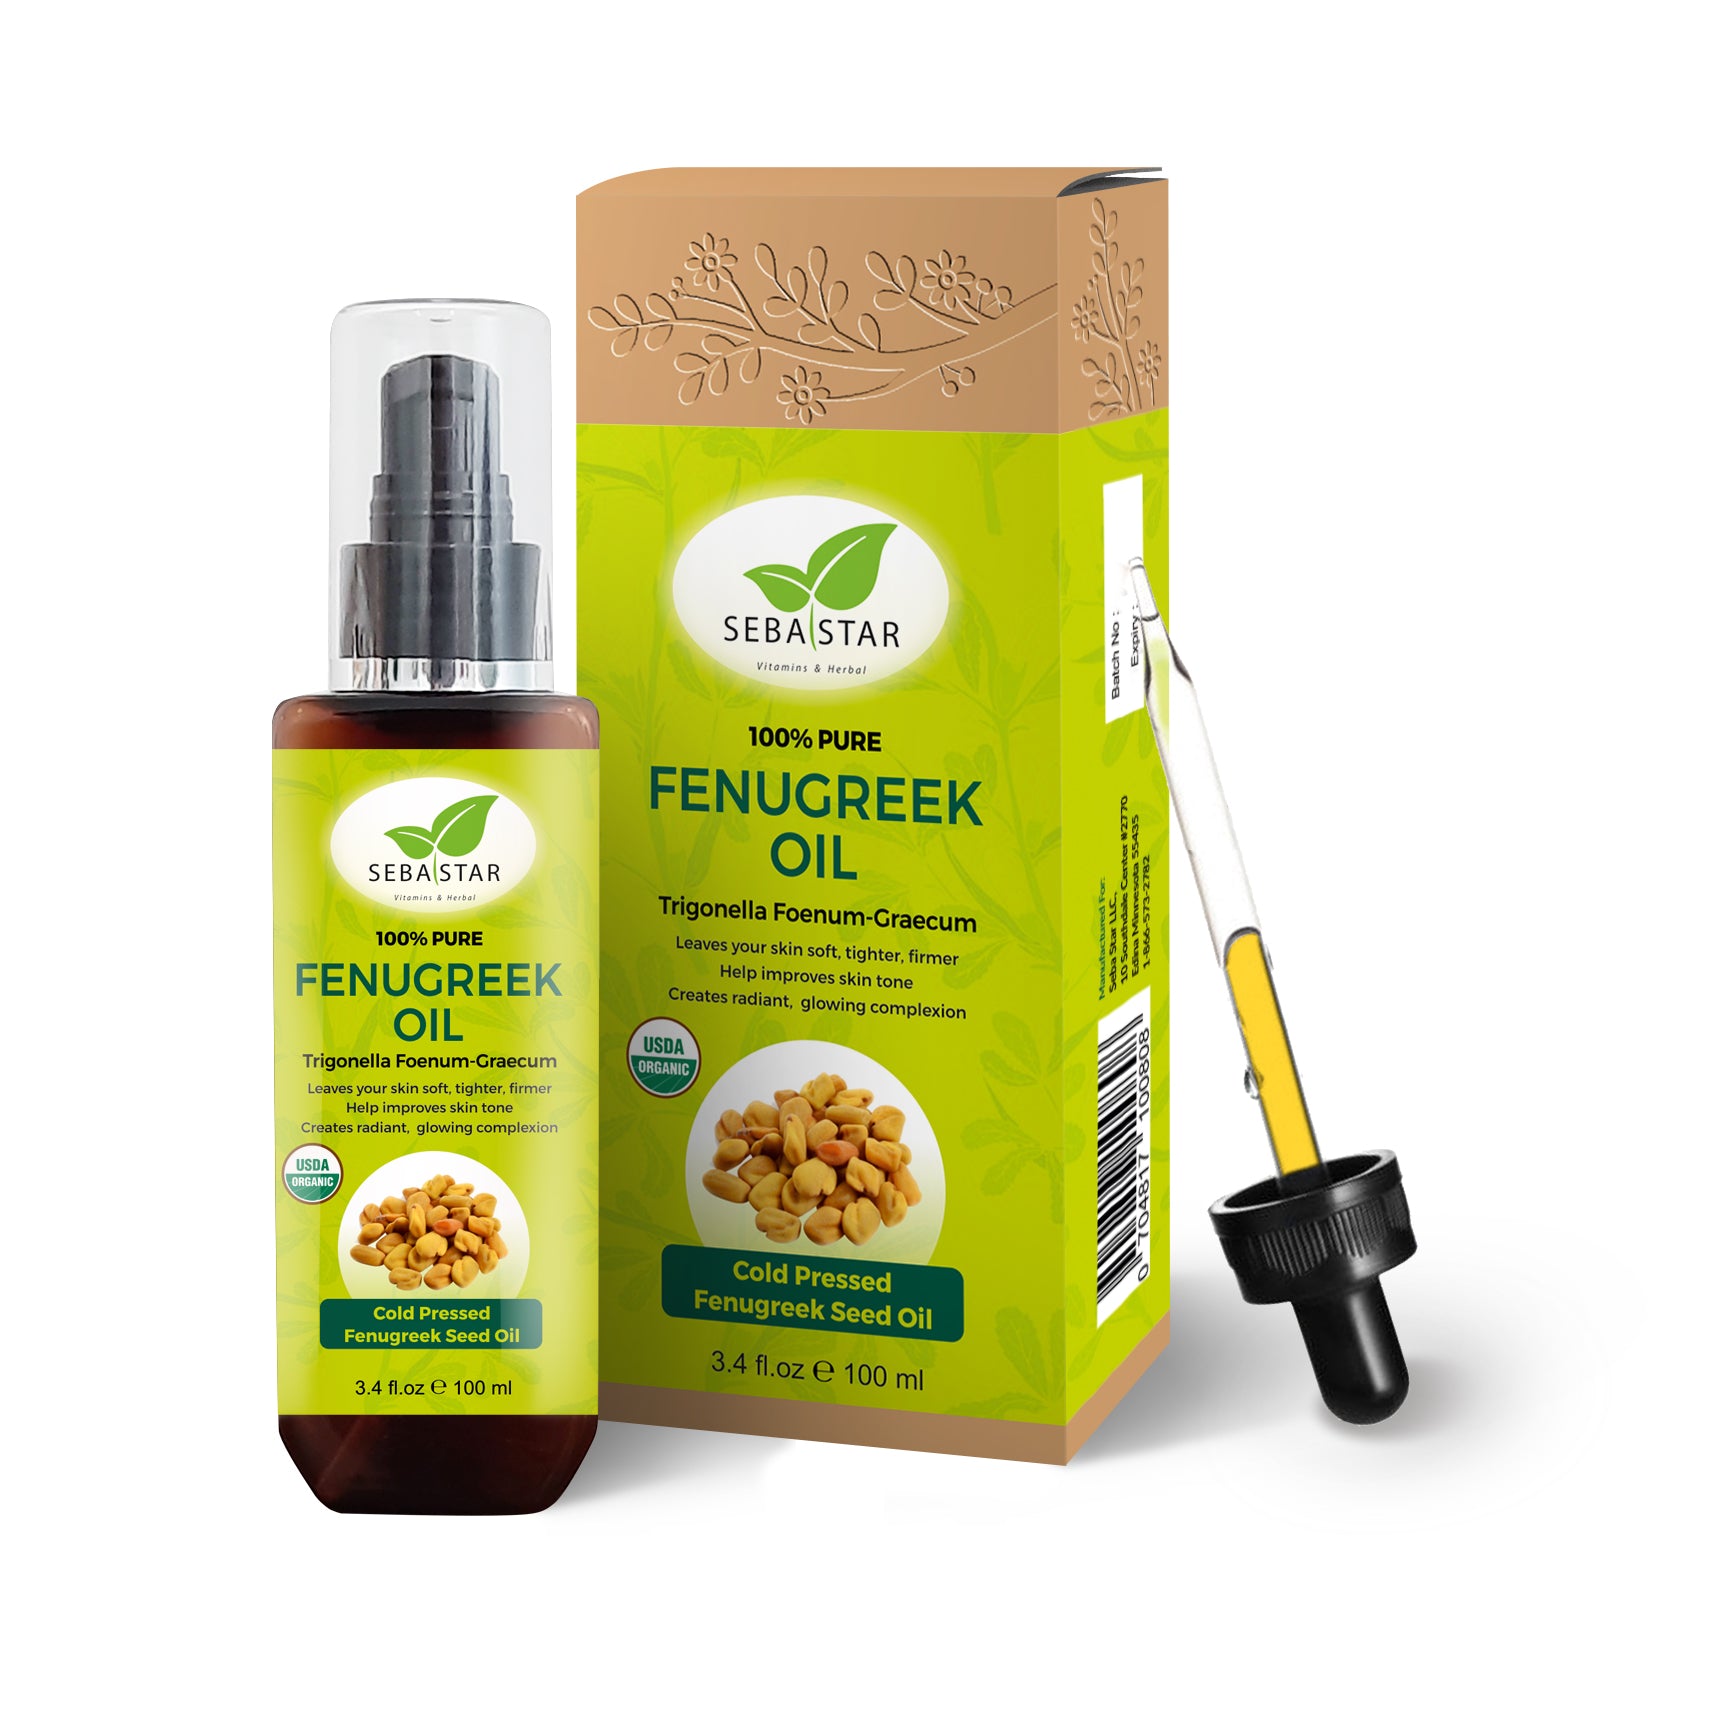 Fenugreek Oil 3.4oz - 100% Natural & Pure Fenugreek Oil for Face and Body